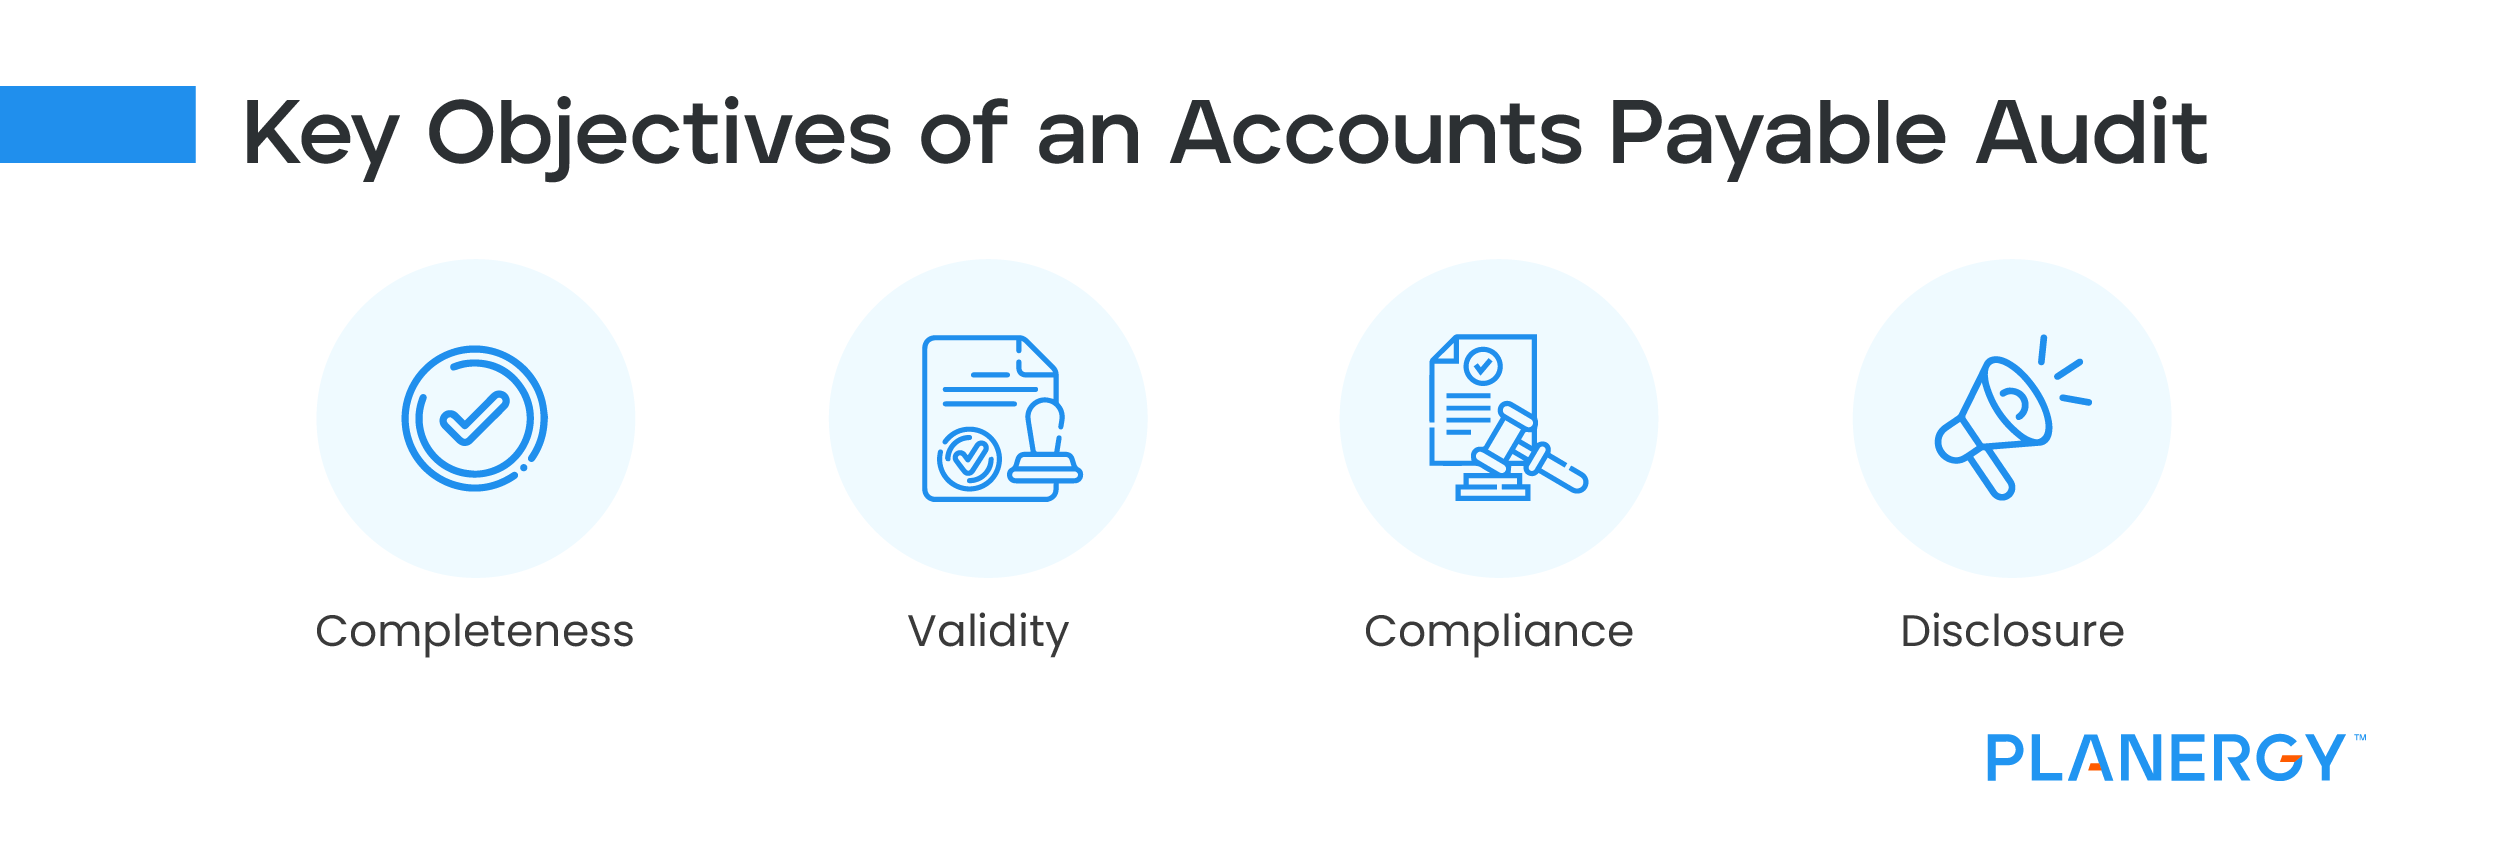 Key Objectives of Accounts Payable Audit